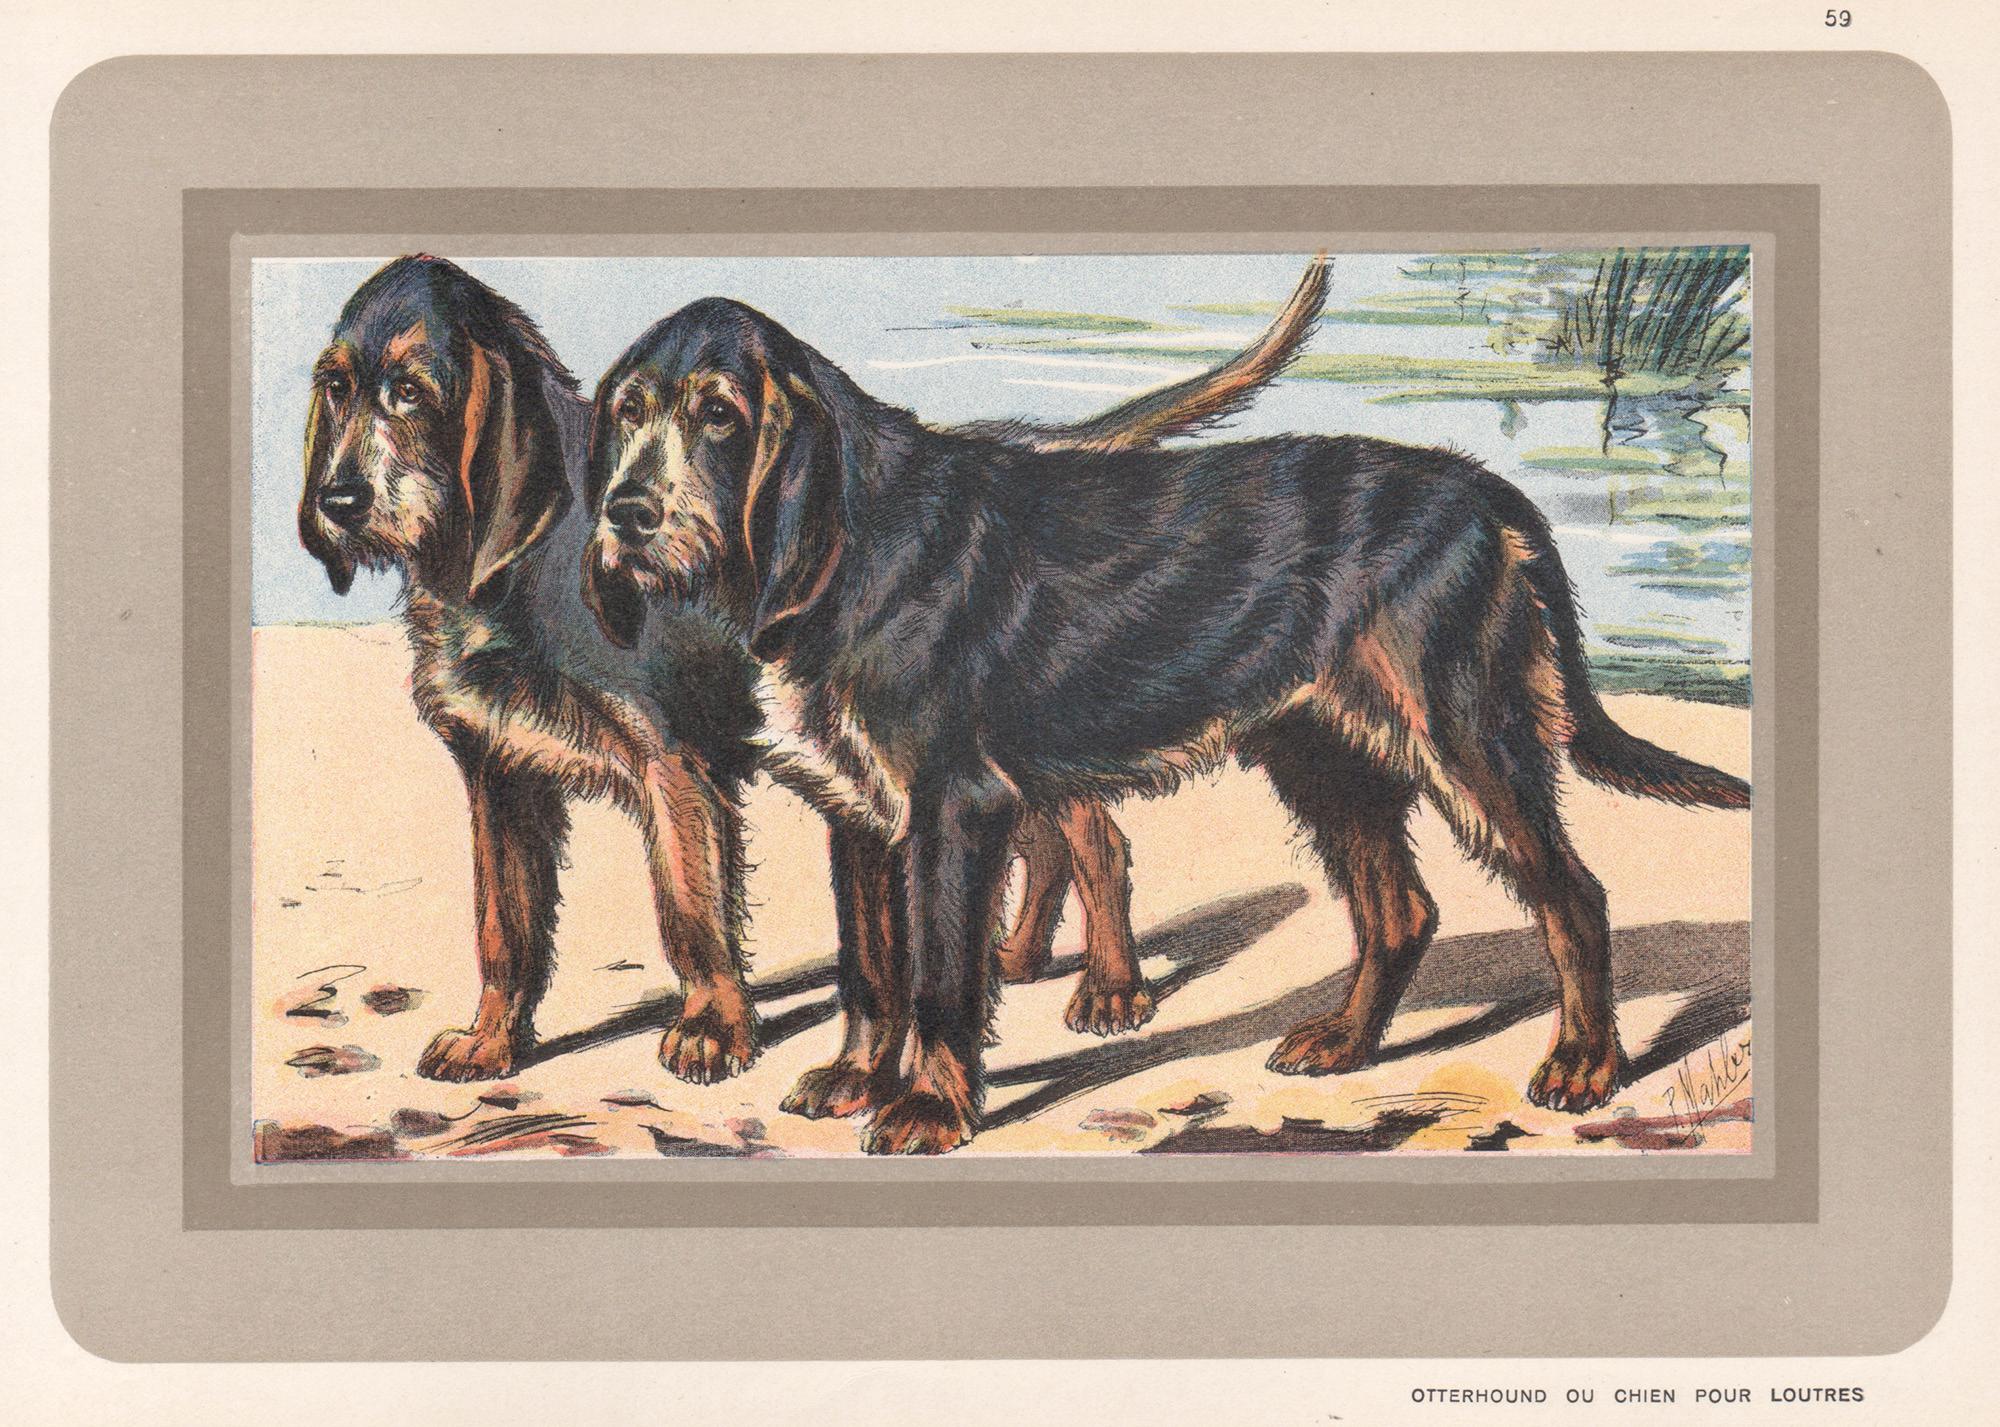 P. Mahler Animal Print - Otterhound Ou Chien Pour Loutres, French hound, dog chromolithograph, 1930s